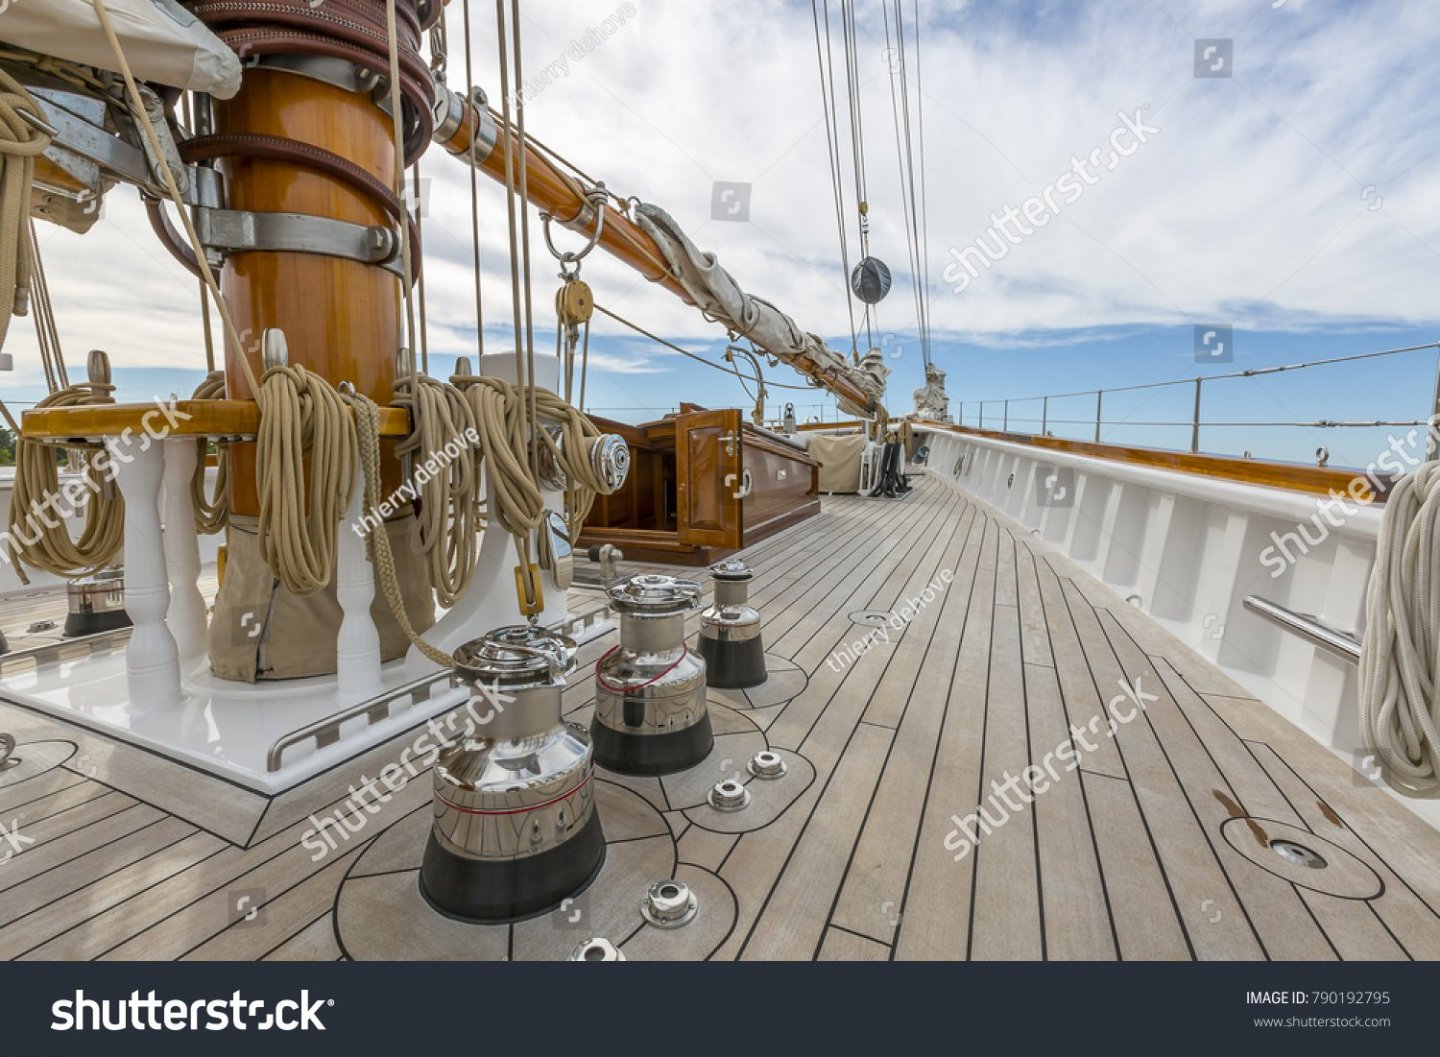 stock-photo-sailing-yacht-columbia-classic-gloucester-fishing-schooner-790192795.jpg